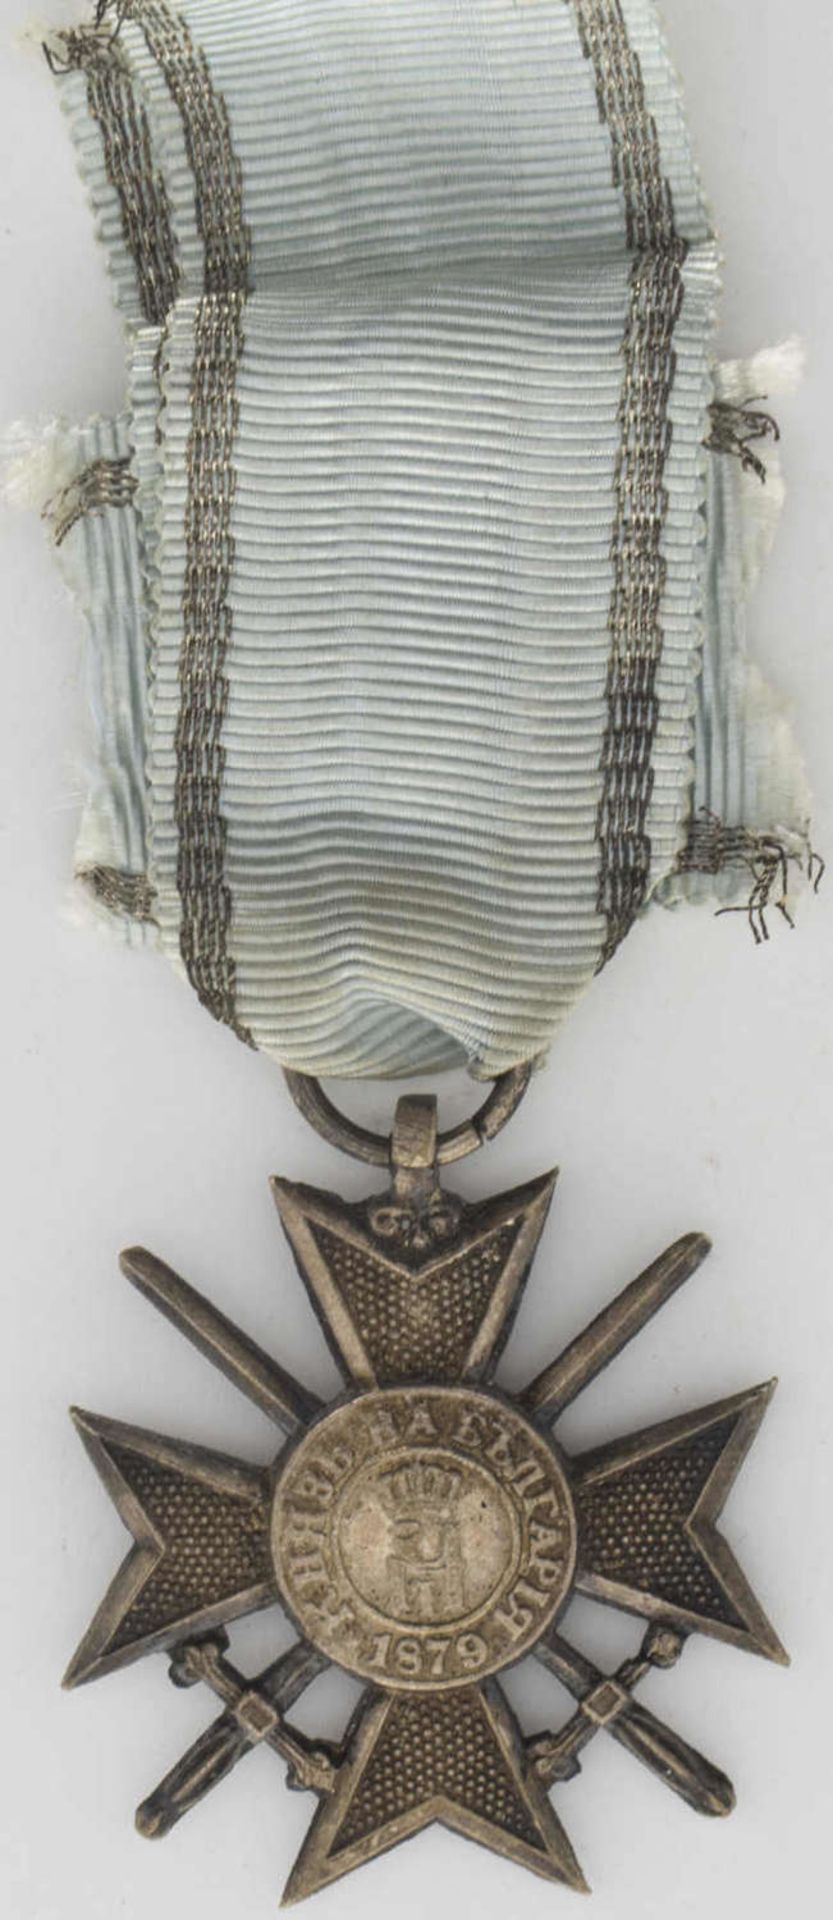 Bulgaria 1879 - 1915, Order of Valor on a ribbon. Infantry.